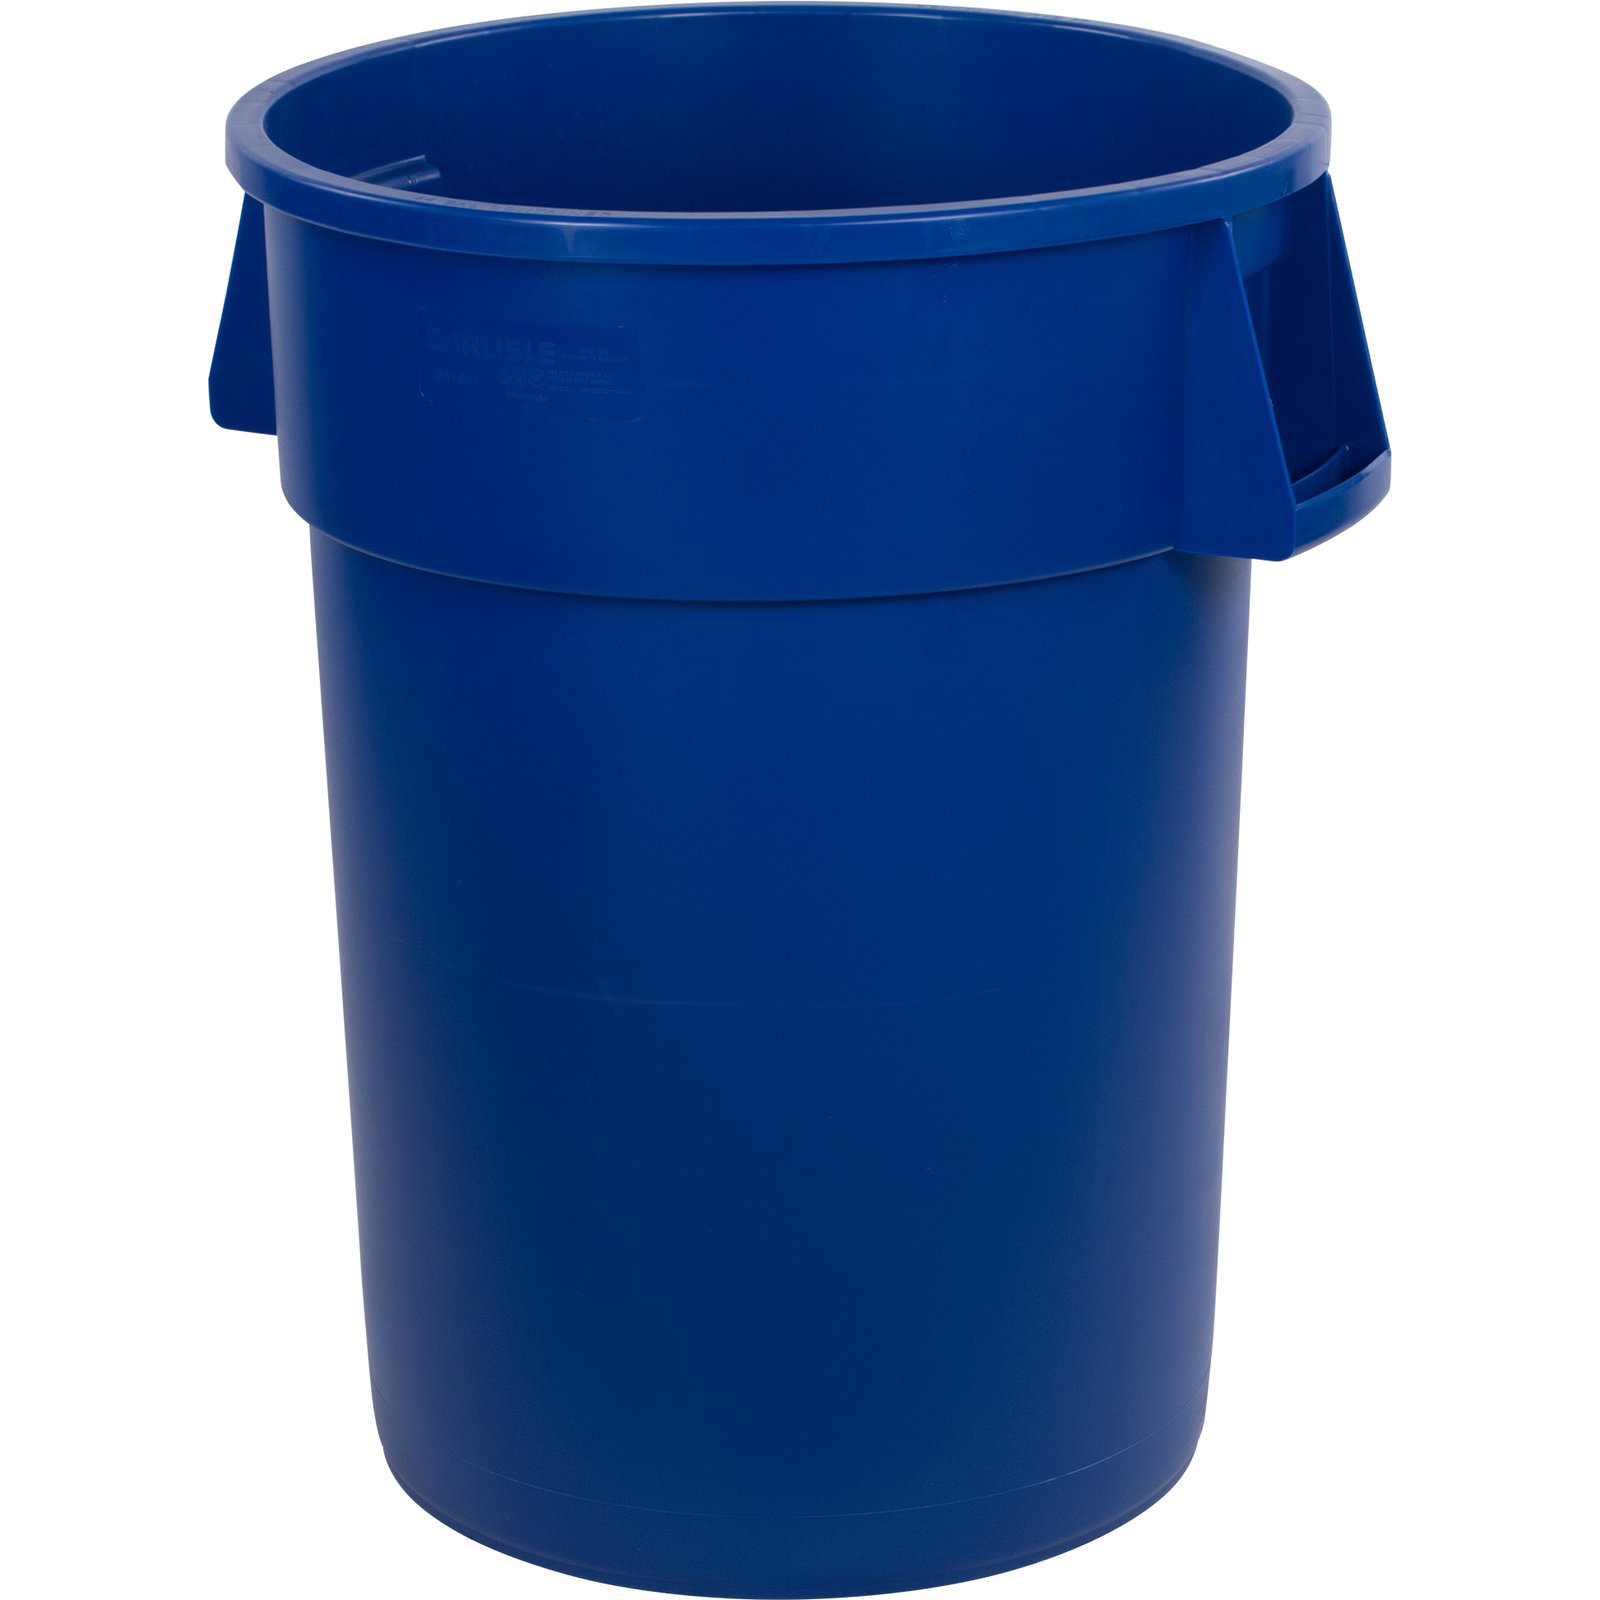 34104414 - Bronco™ Round Waste Bin Trash Container 44 Gallon